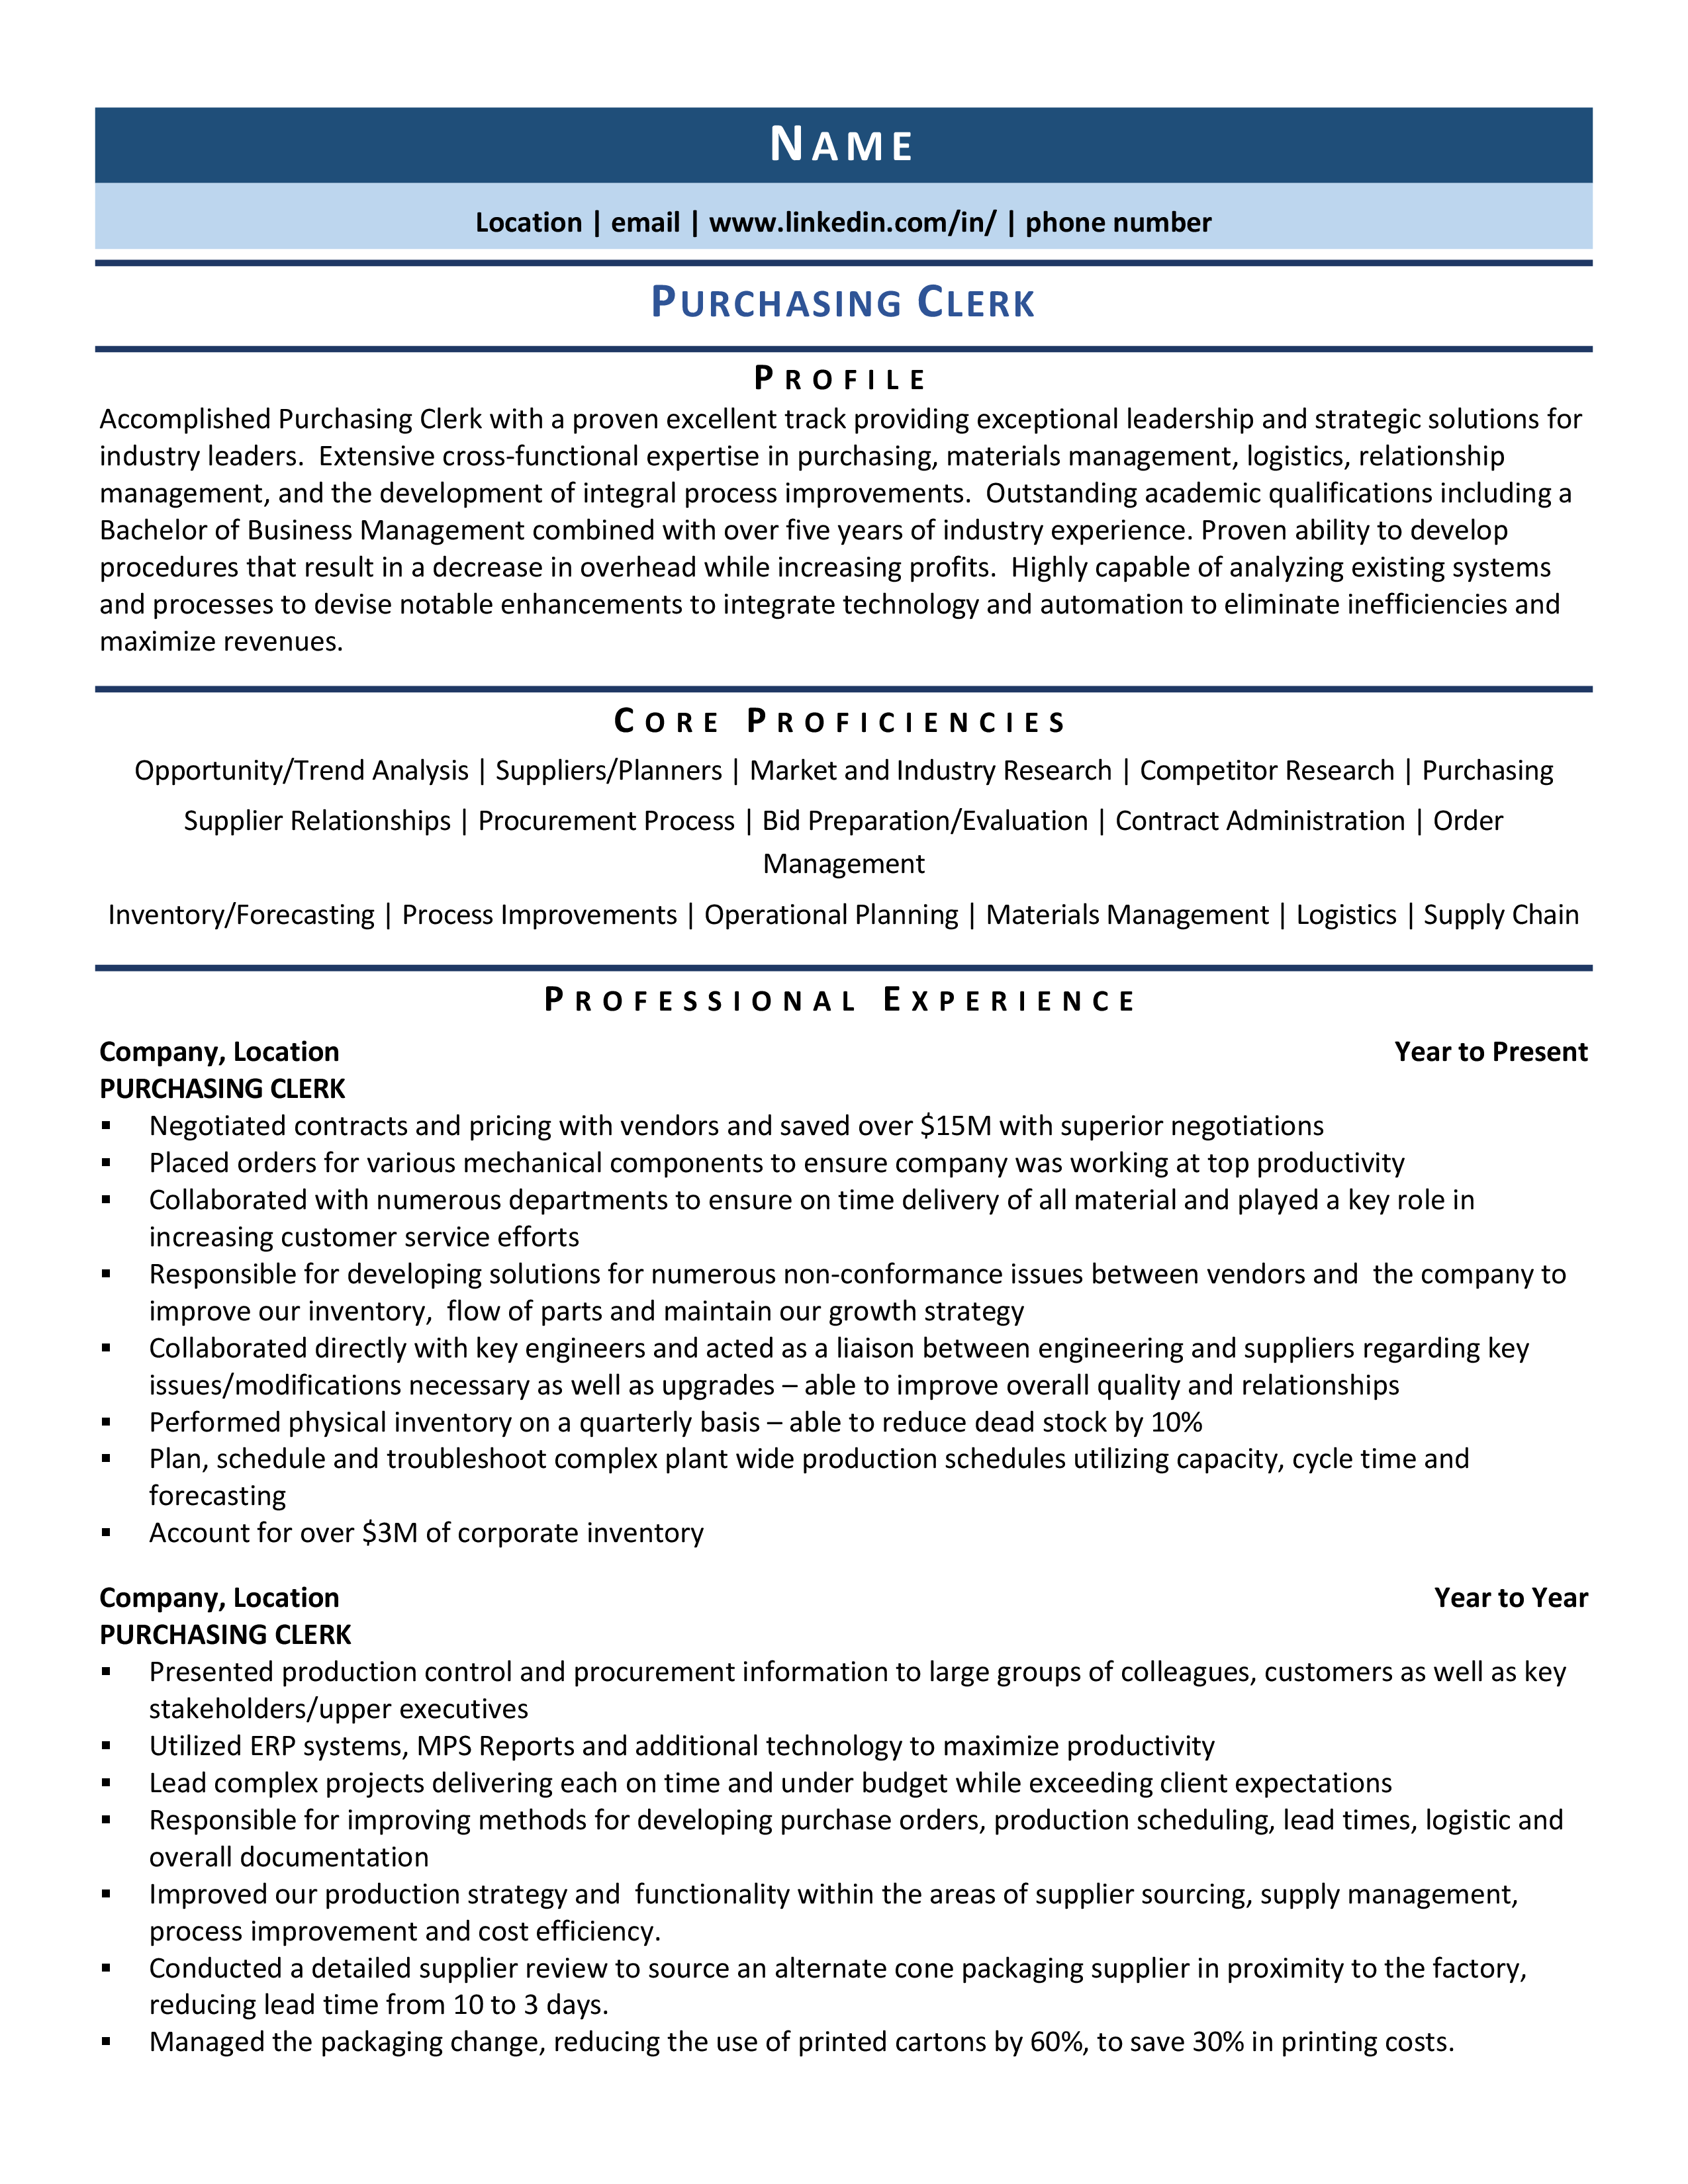 resume star bullet points